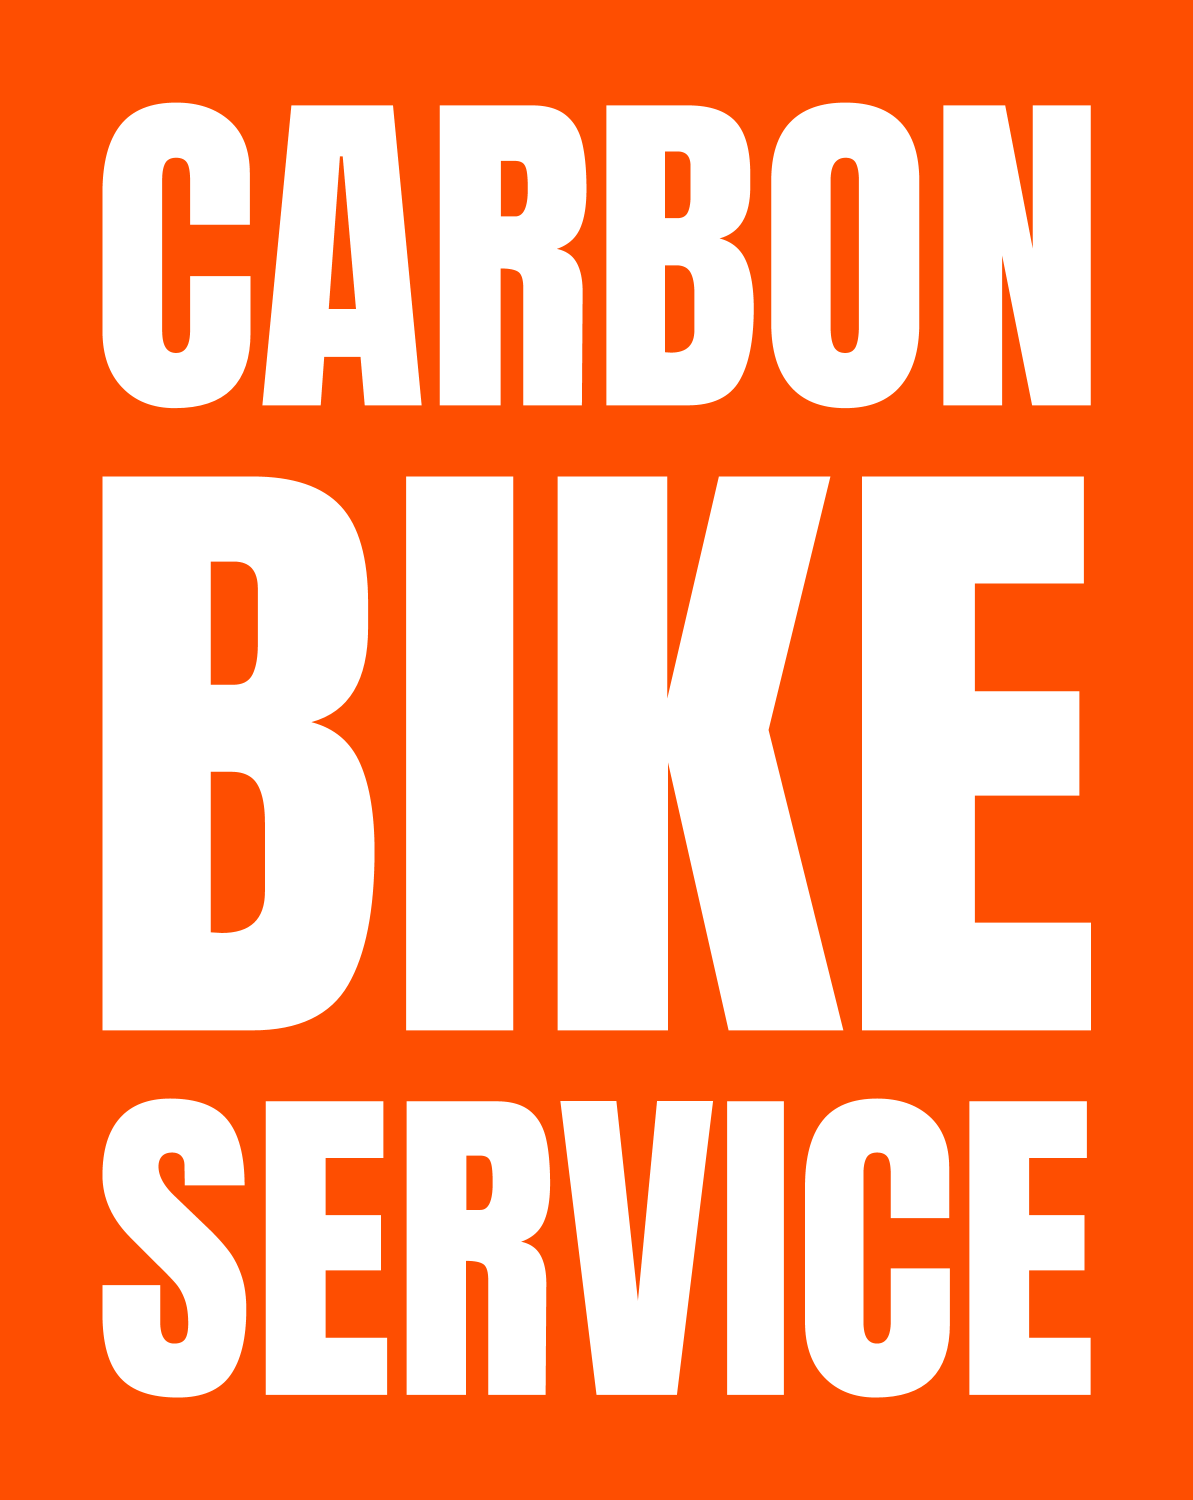 (c) Carbon-bike-service.eu